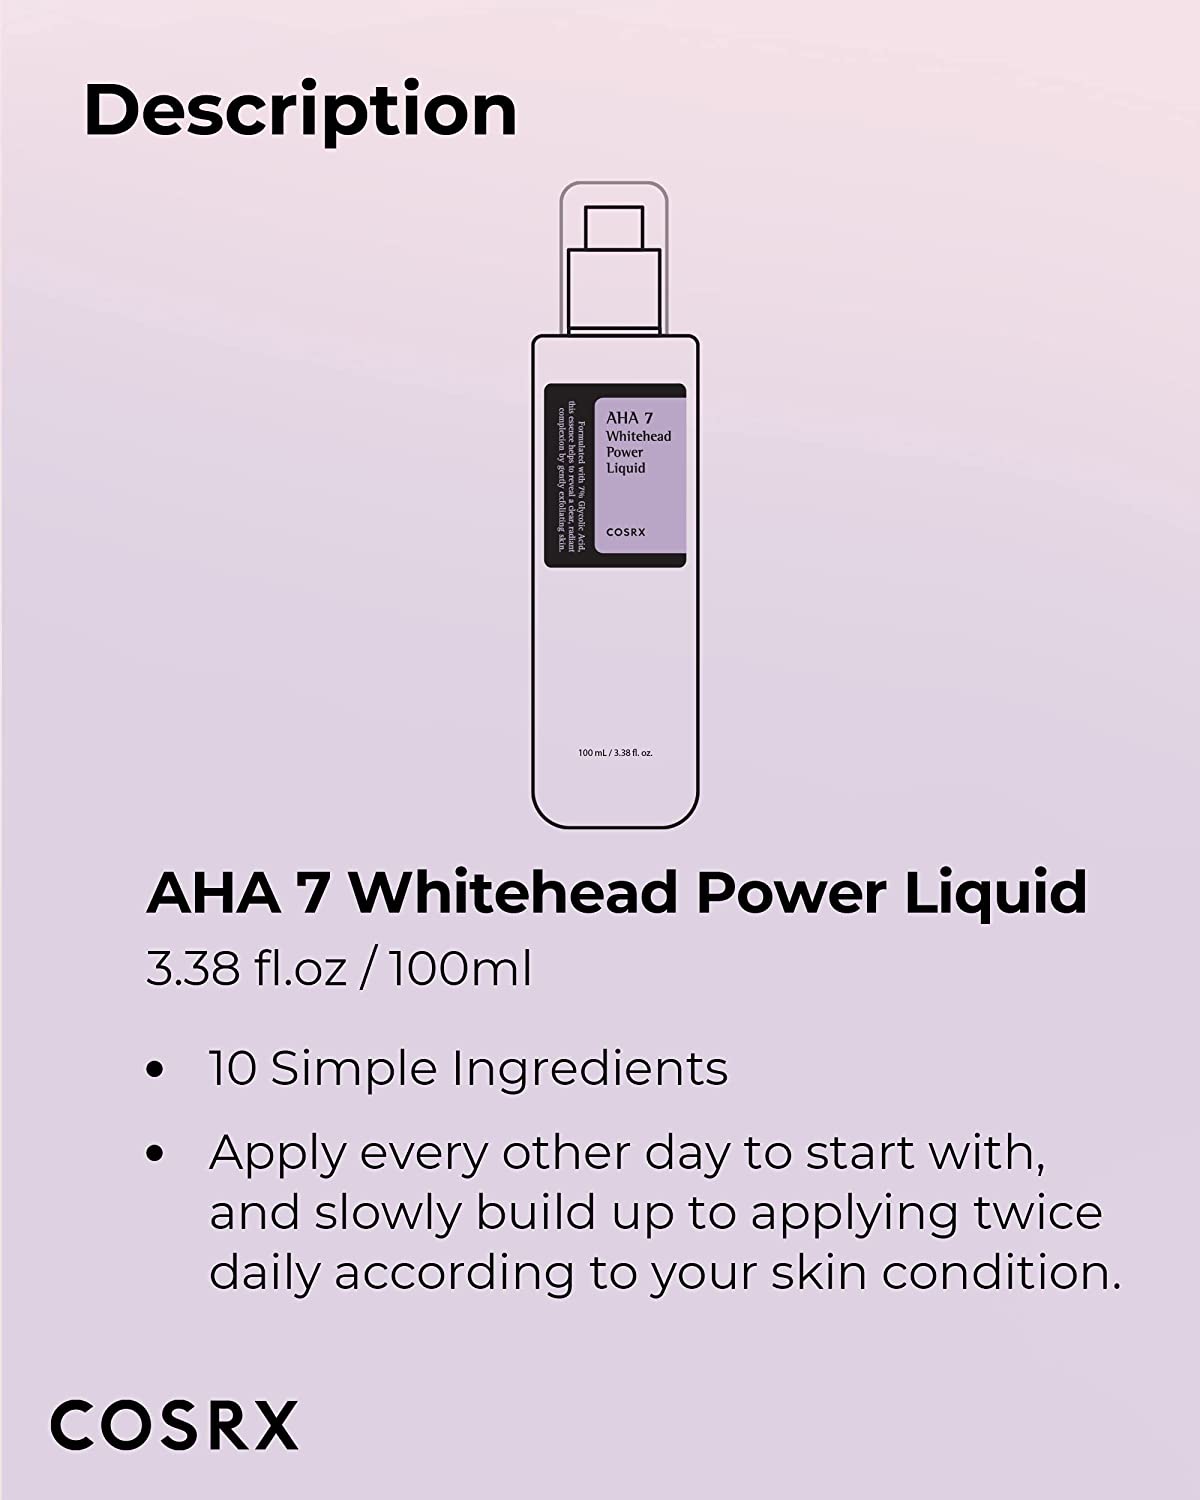 COSRX AHA 7 Whitehead Power Liquid, 3.38 fl.oz / 100ml